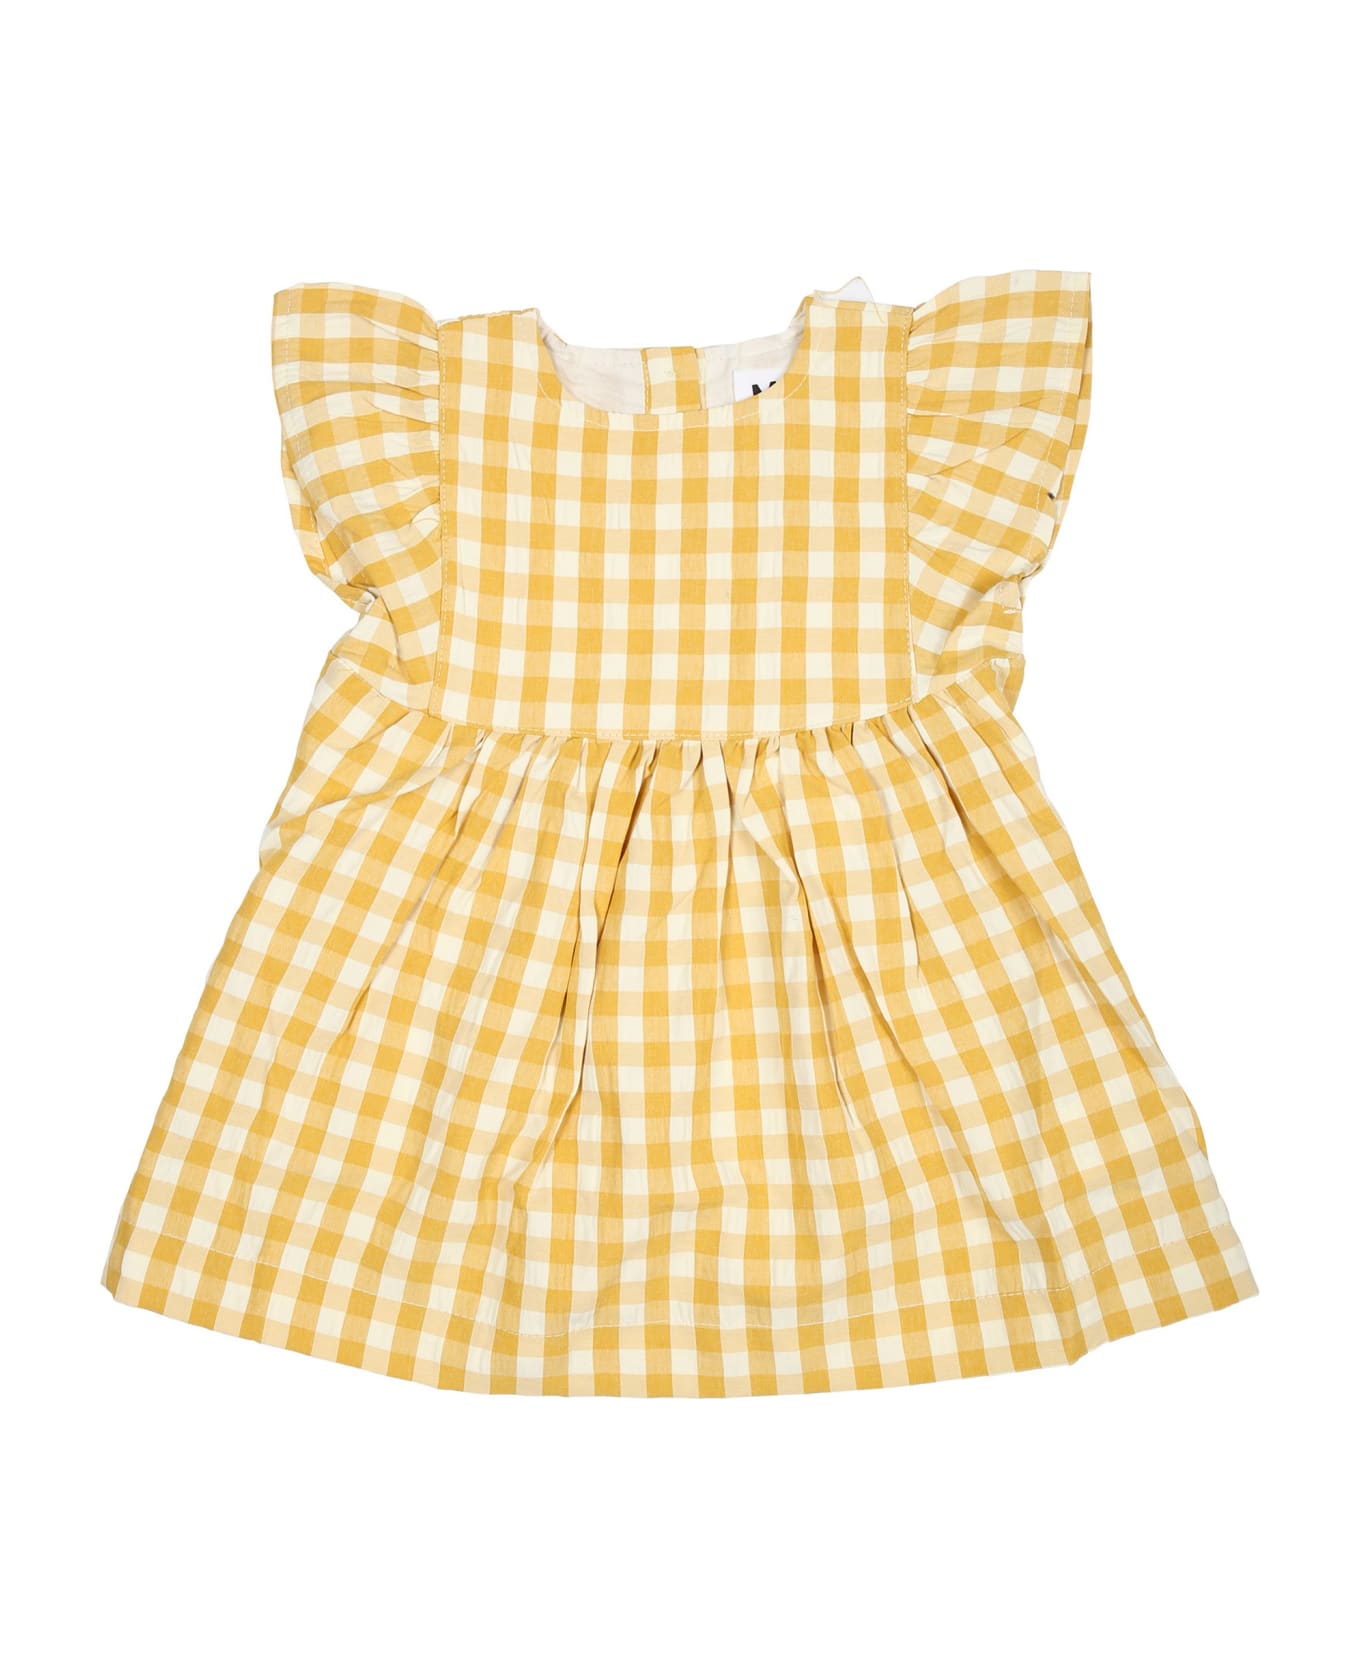 Molo Casual Yellow Dress Chantal For Baby Girl - Yellow